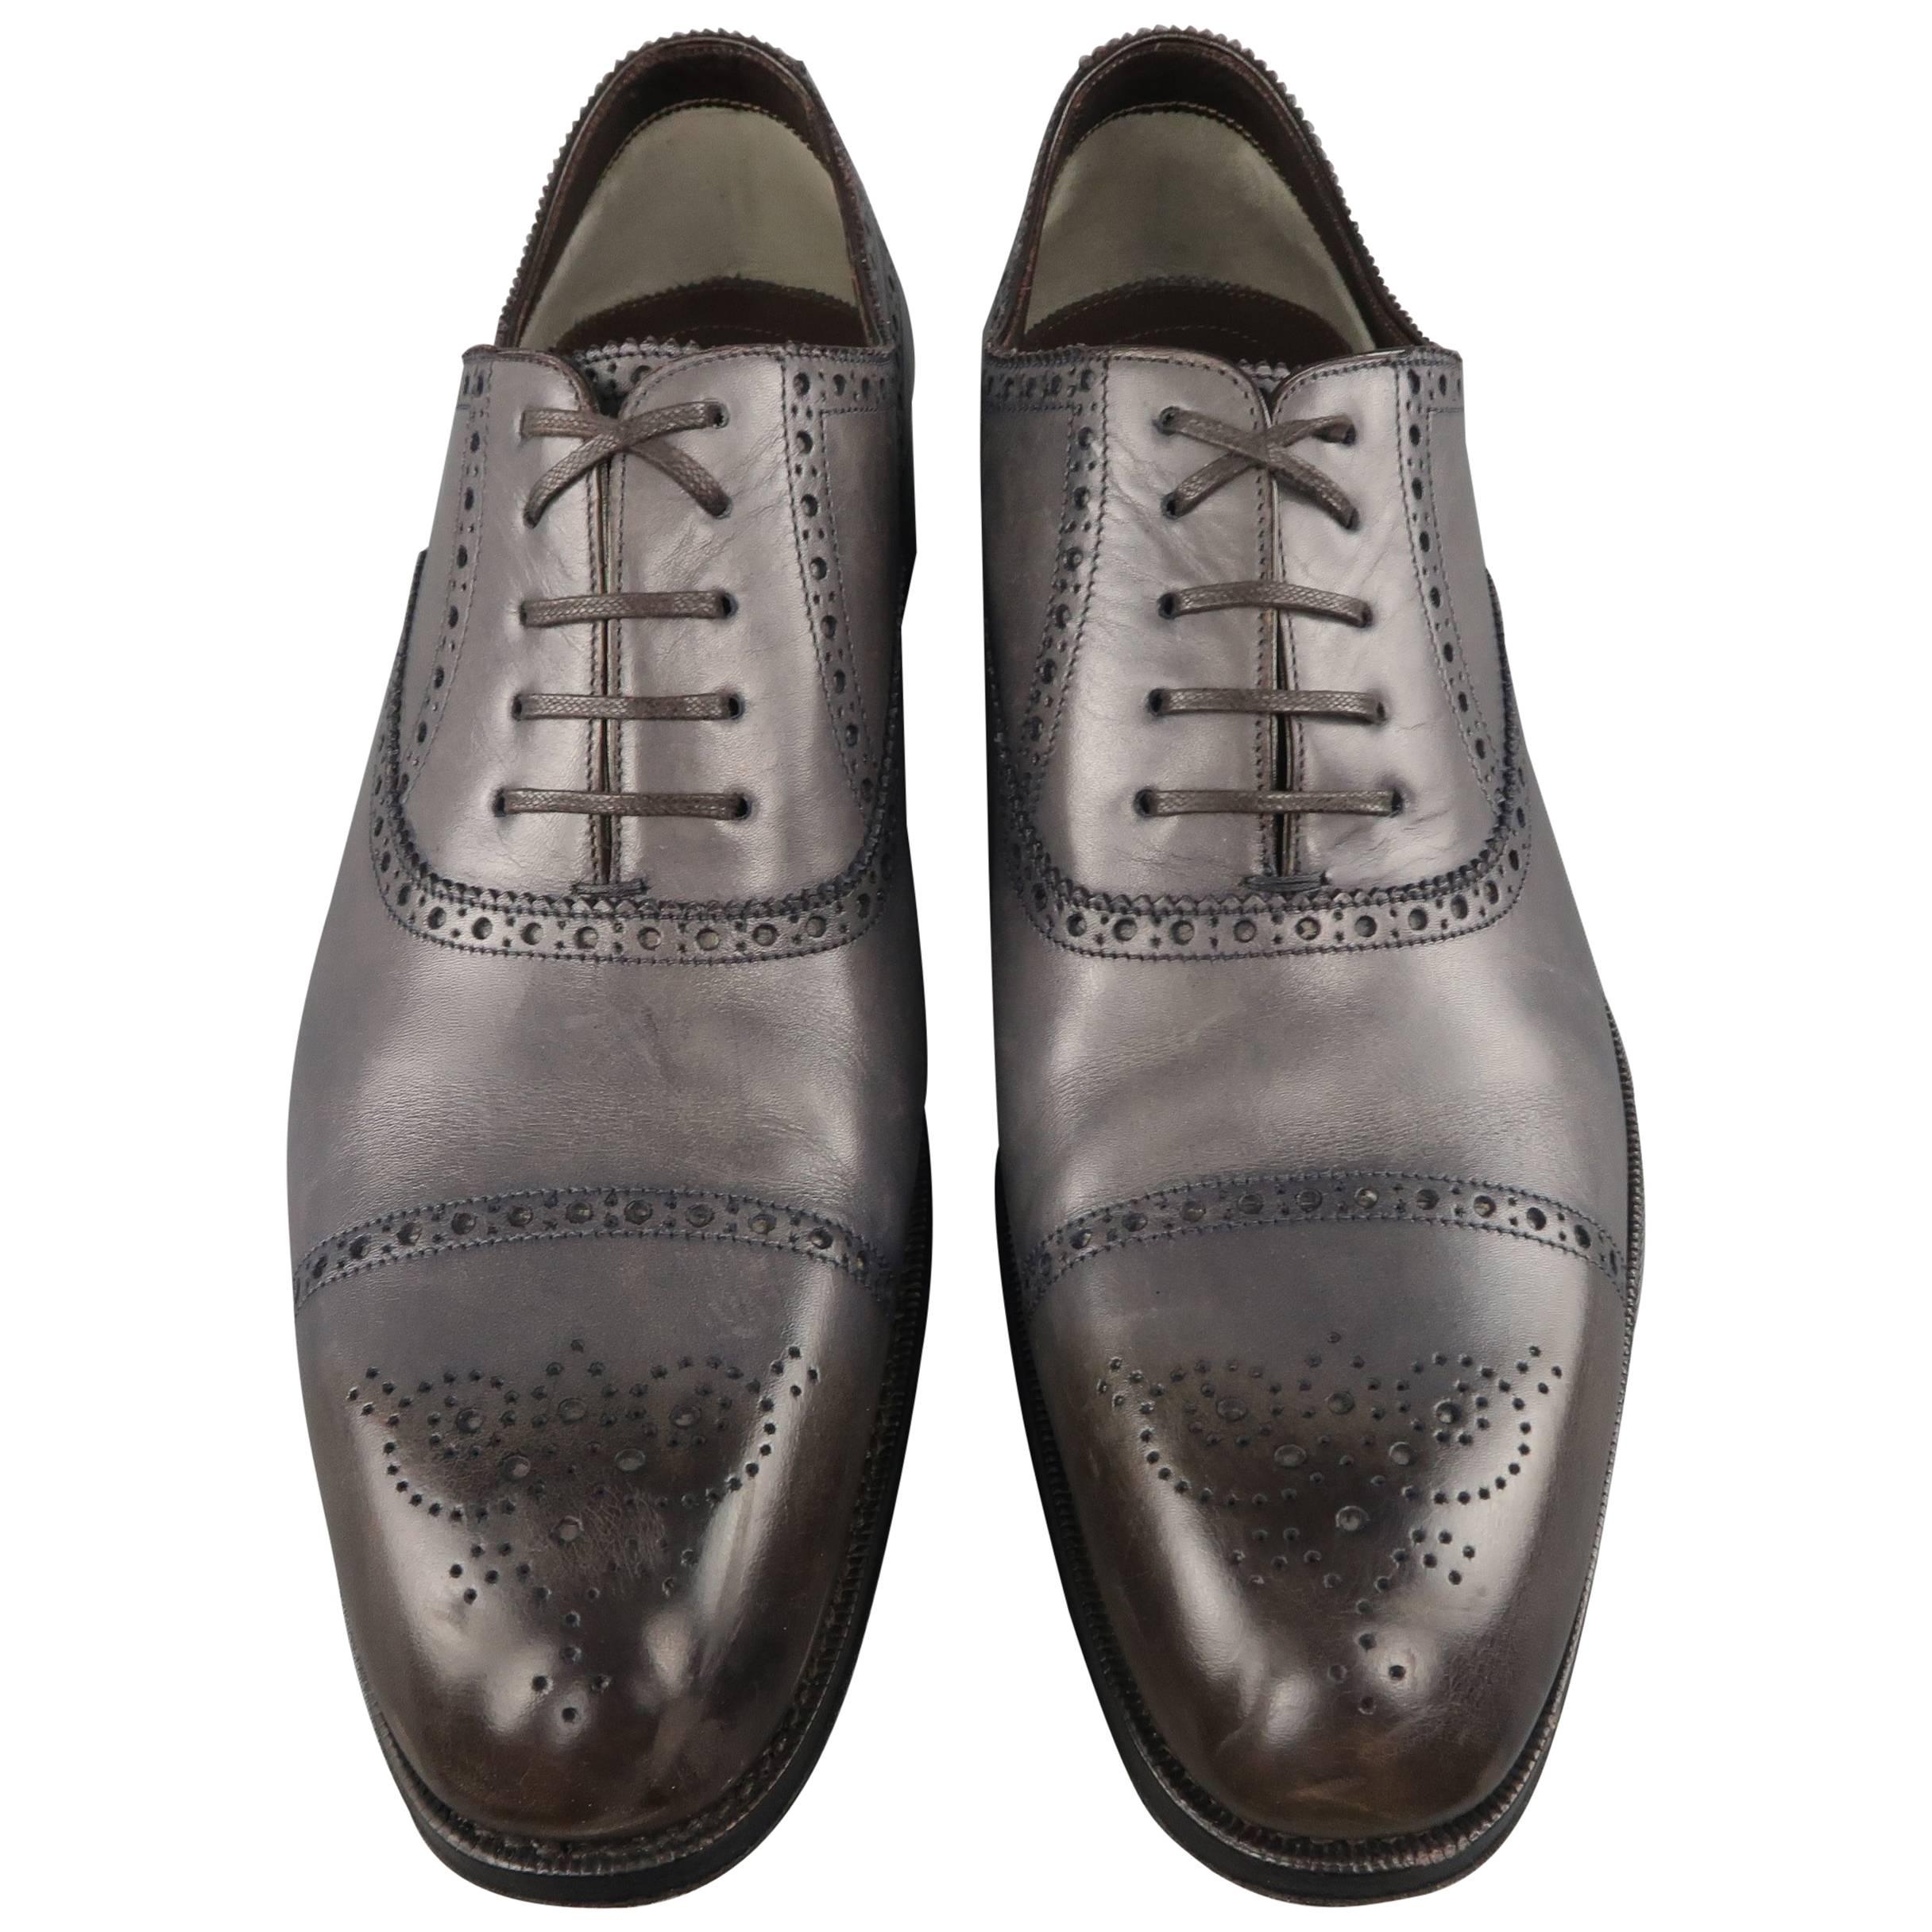 TOM FORD Shoes - Leather, Gray, Black, Dress, Edgar Medallion